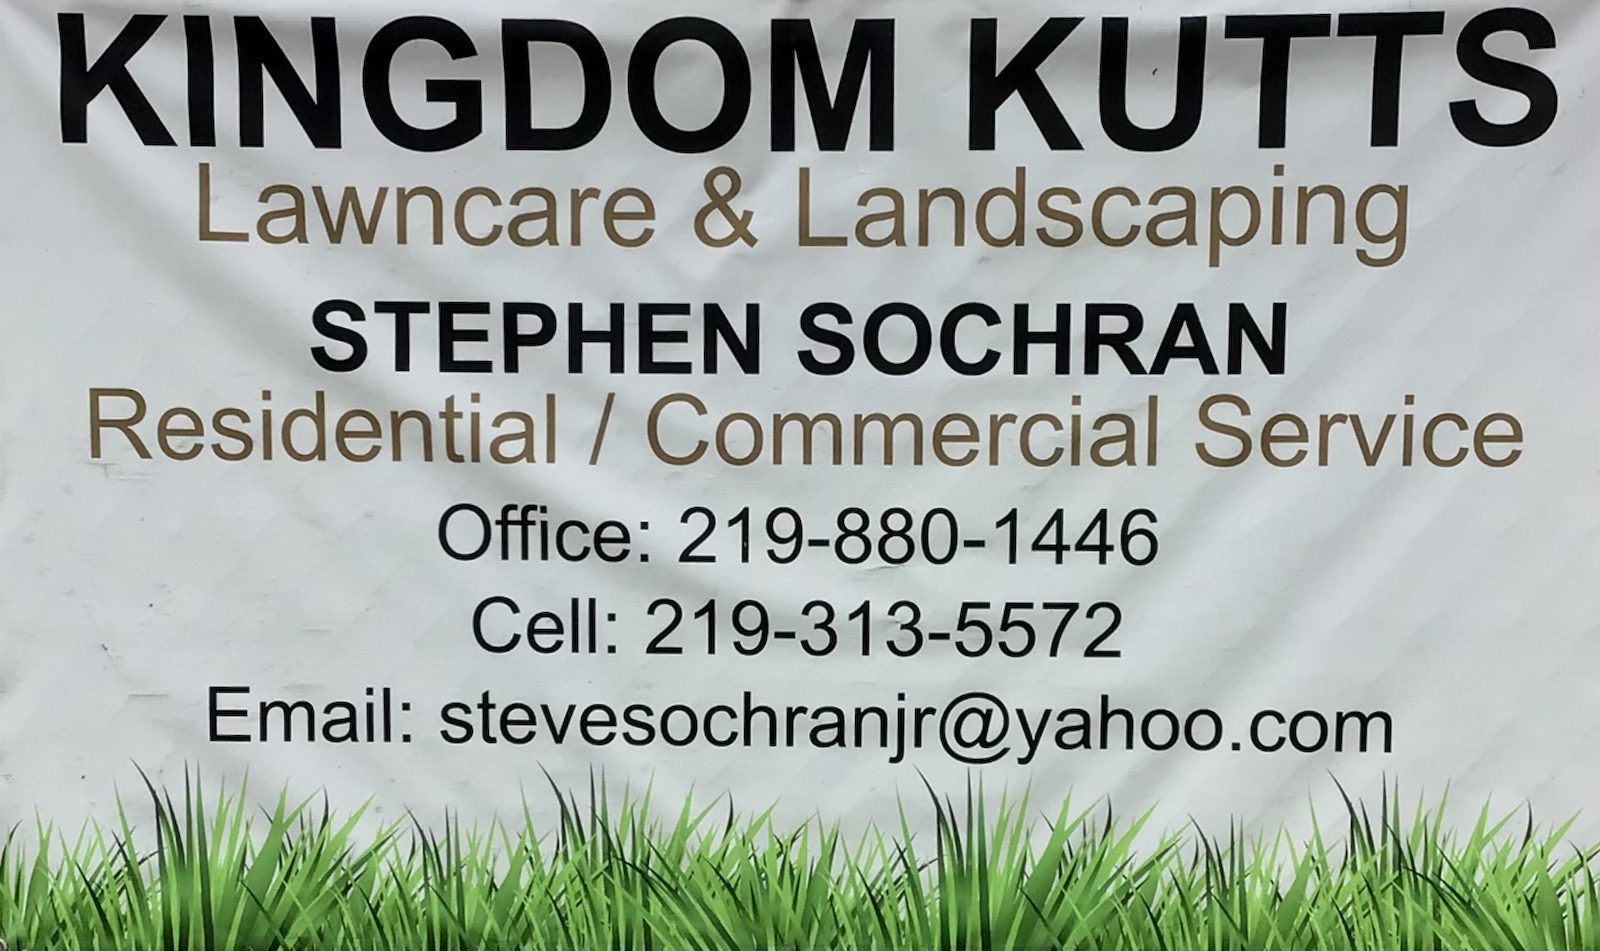 Kingdom Kutts Lawncare & Landscaping